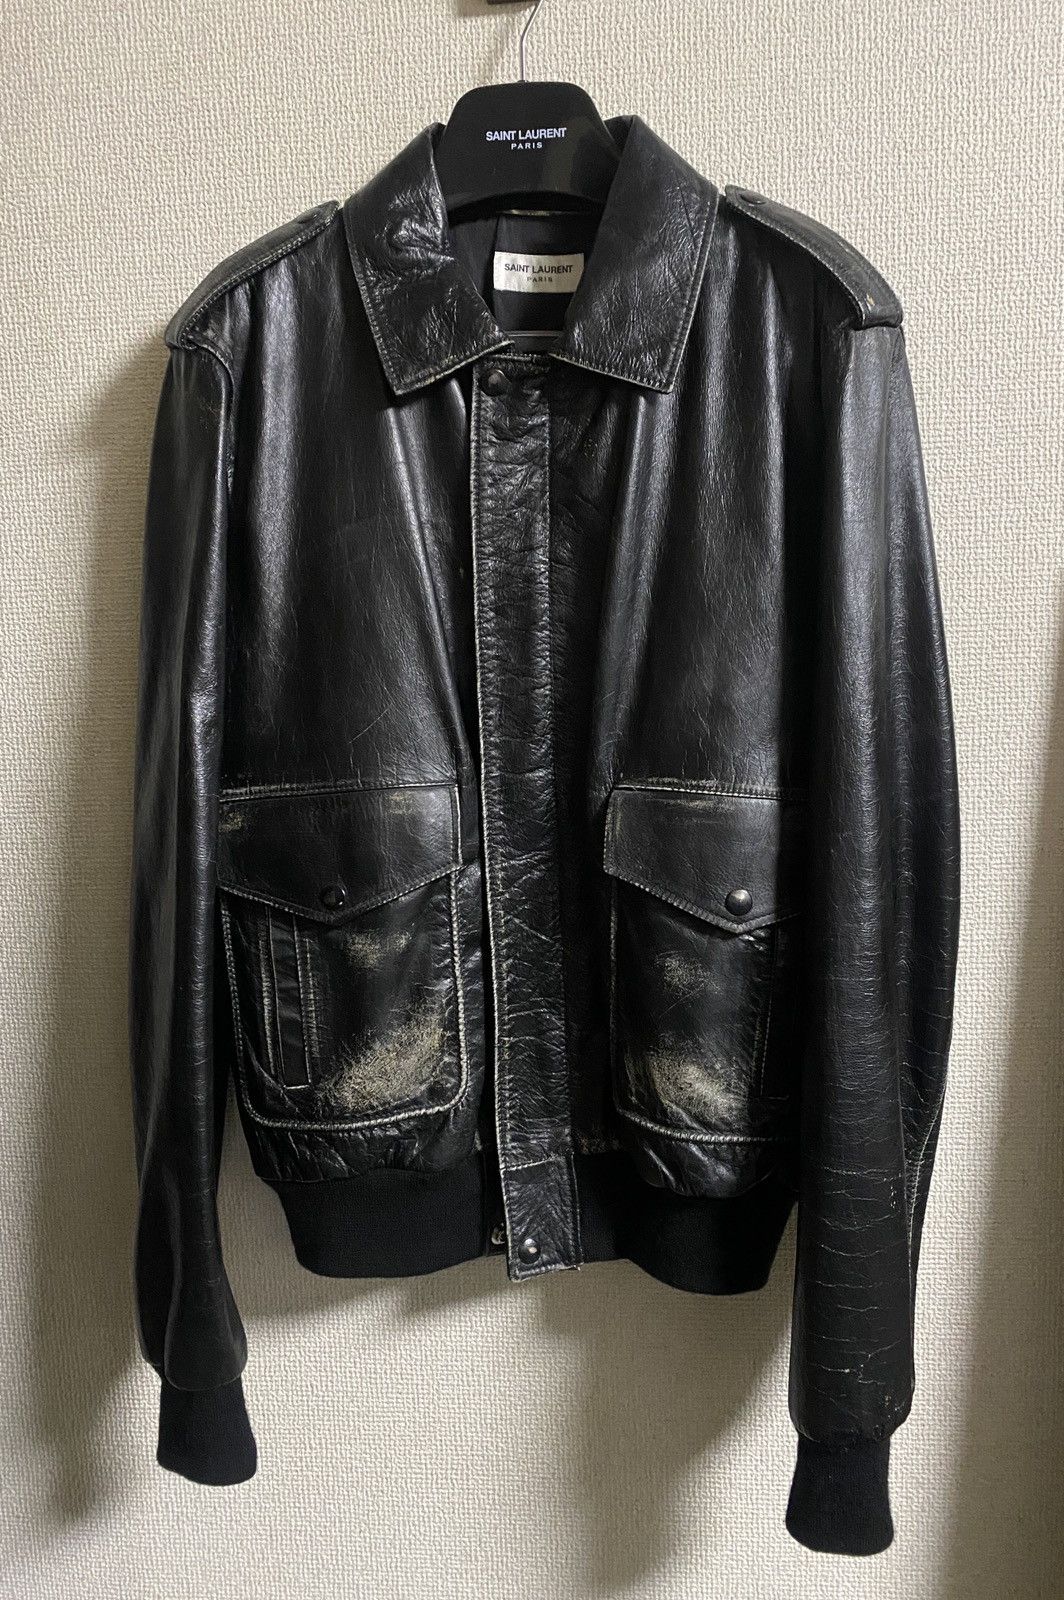 Saint Laurent Hedi Slimane Leather Jacket | Grailed